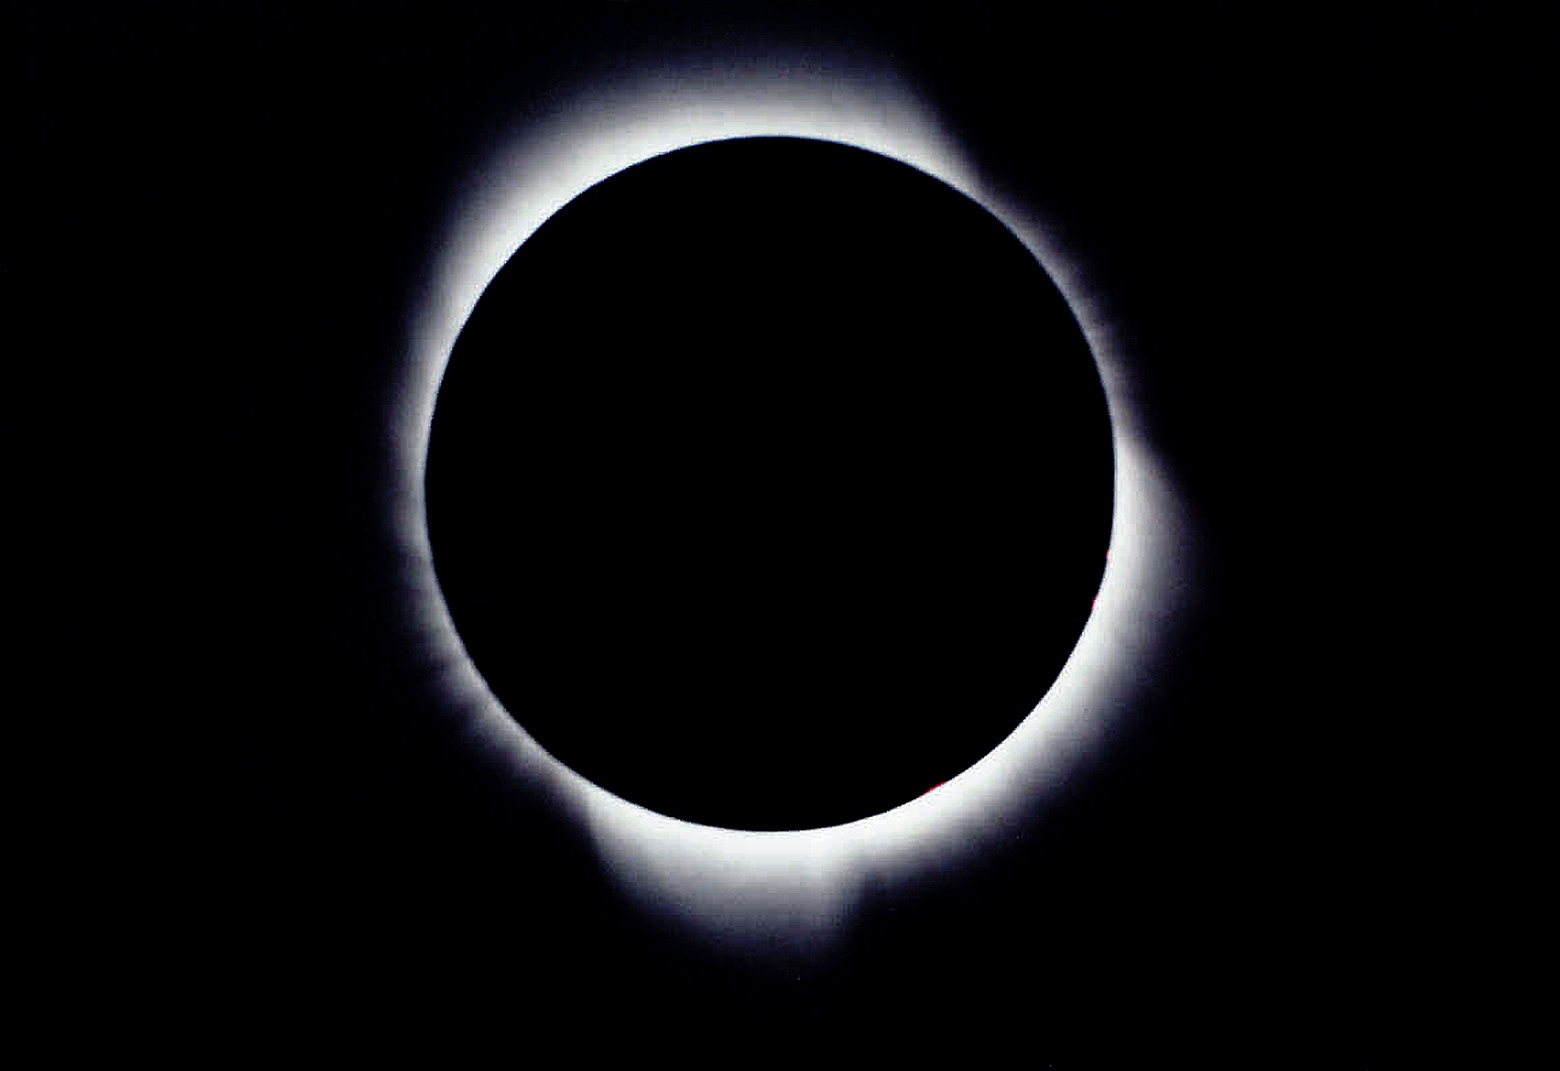 Eclipse 1994 - A54 - Full Corona- Medium